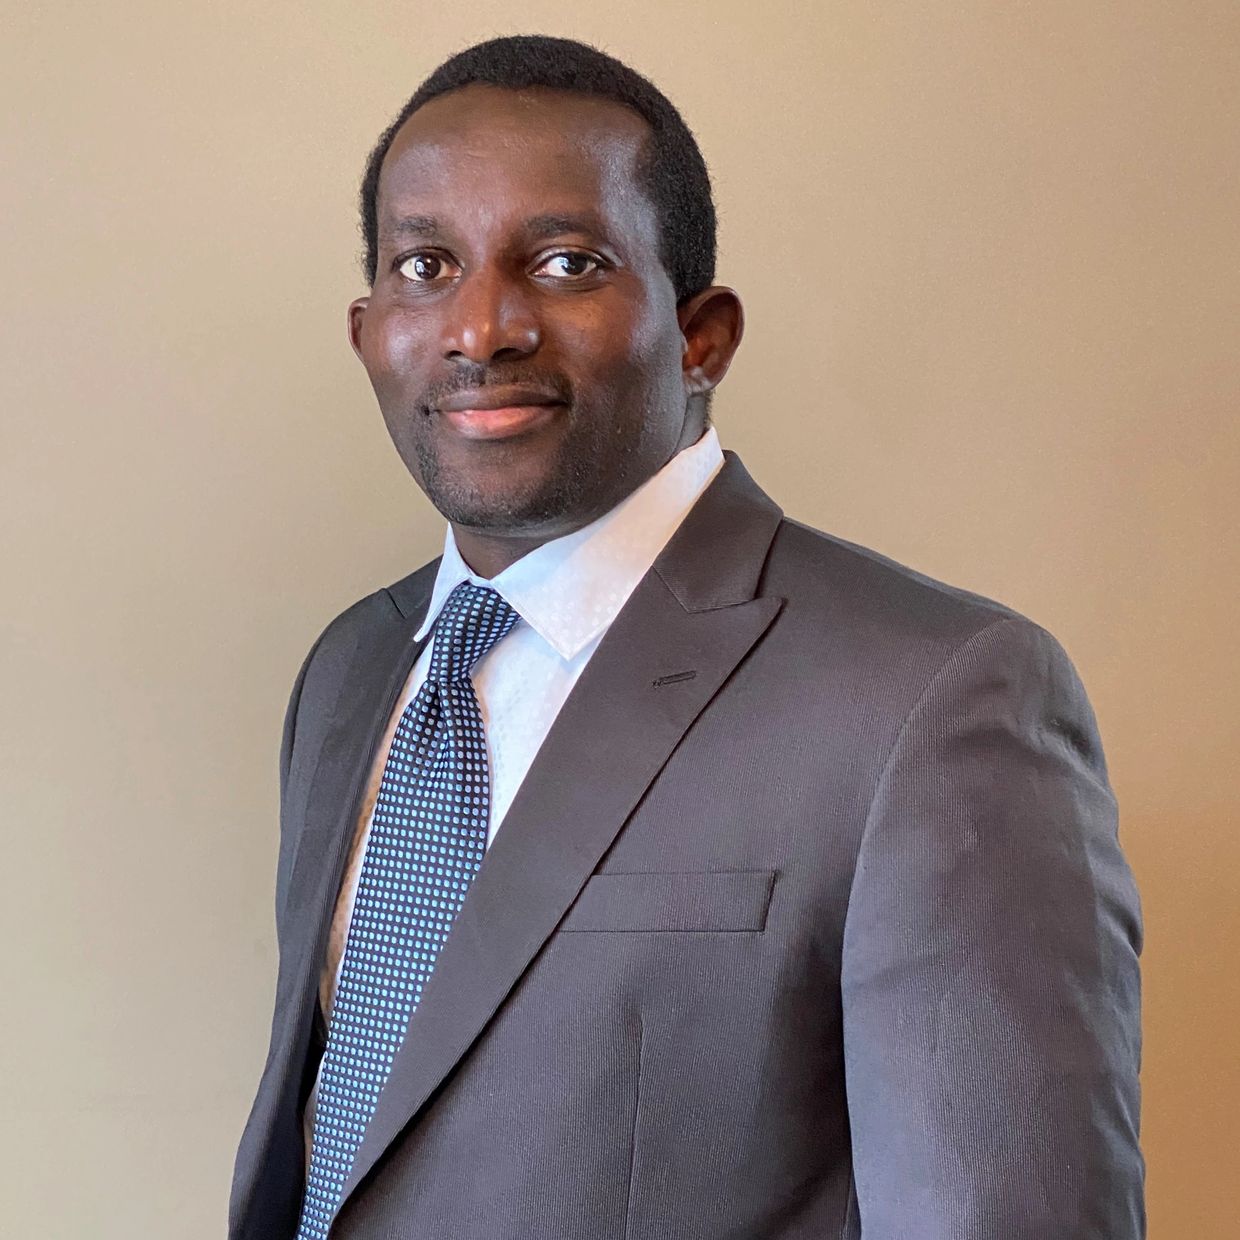 Emmanuel Aideloje
Business Lawyer Calgary
Okotoks Lawyer
Wills & Estates
Immigration Law
Real Estate